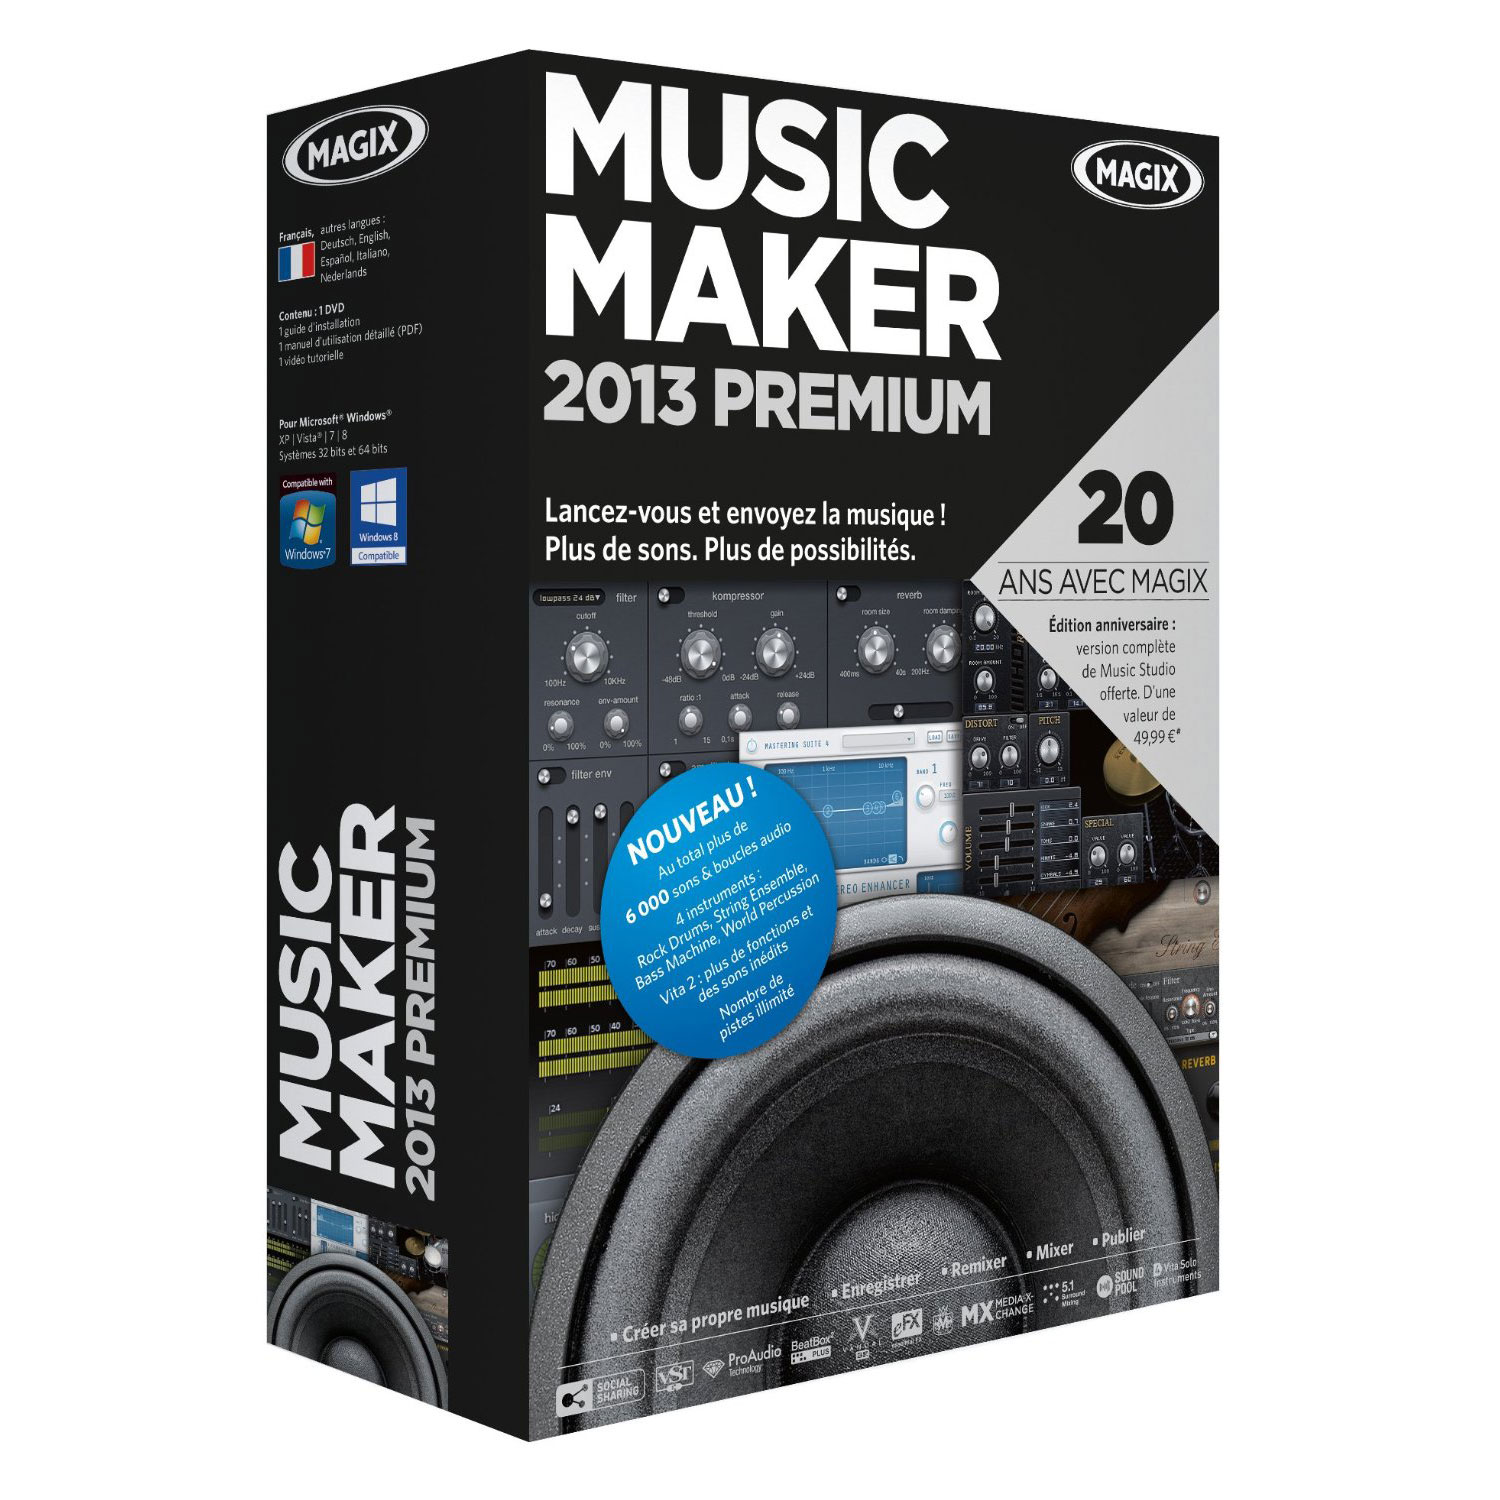 magix music maker 2015 free download full version